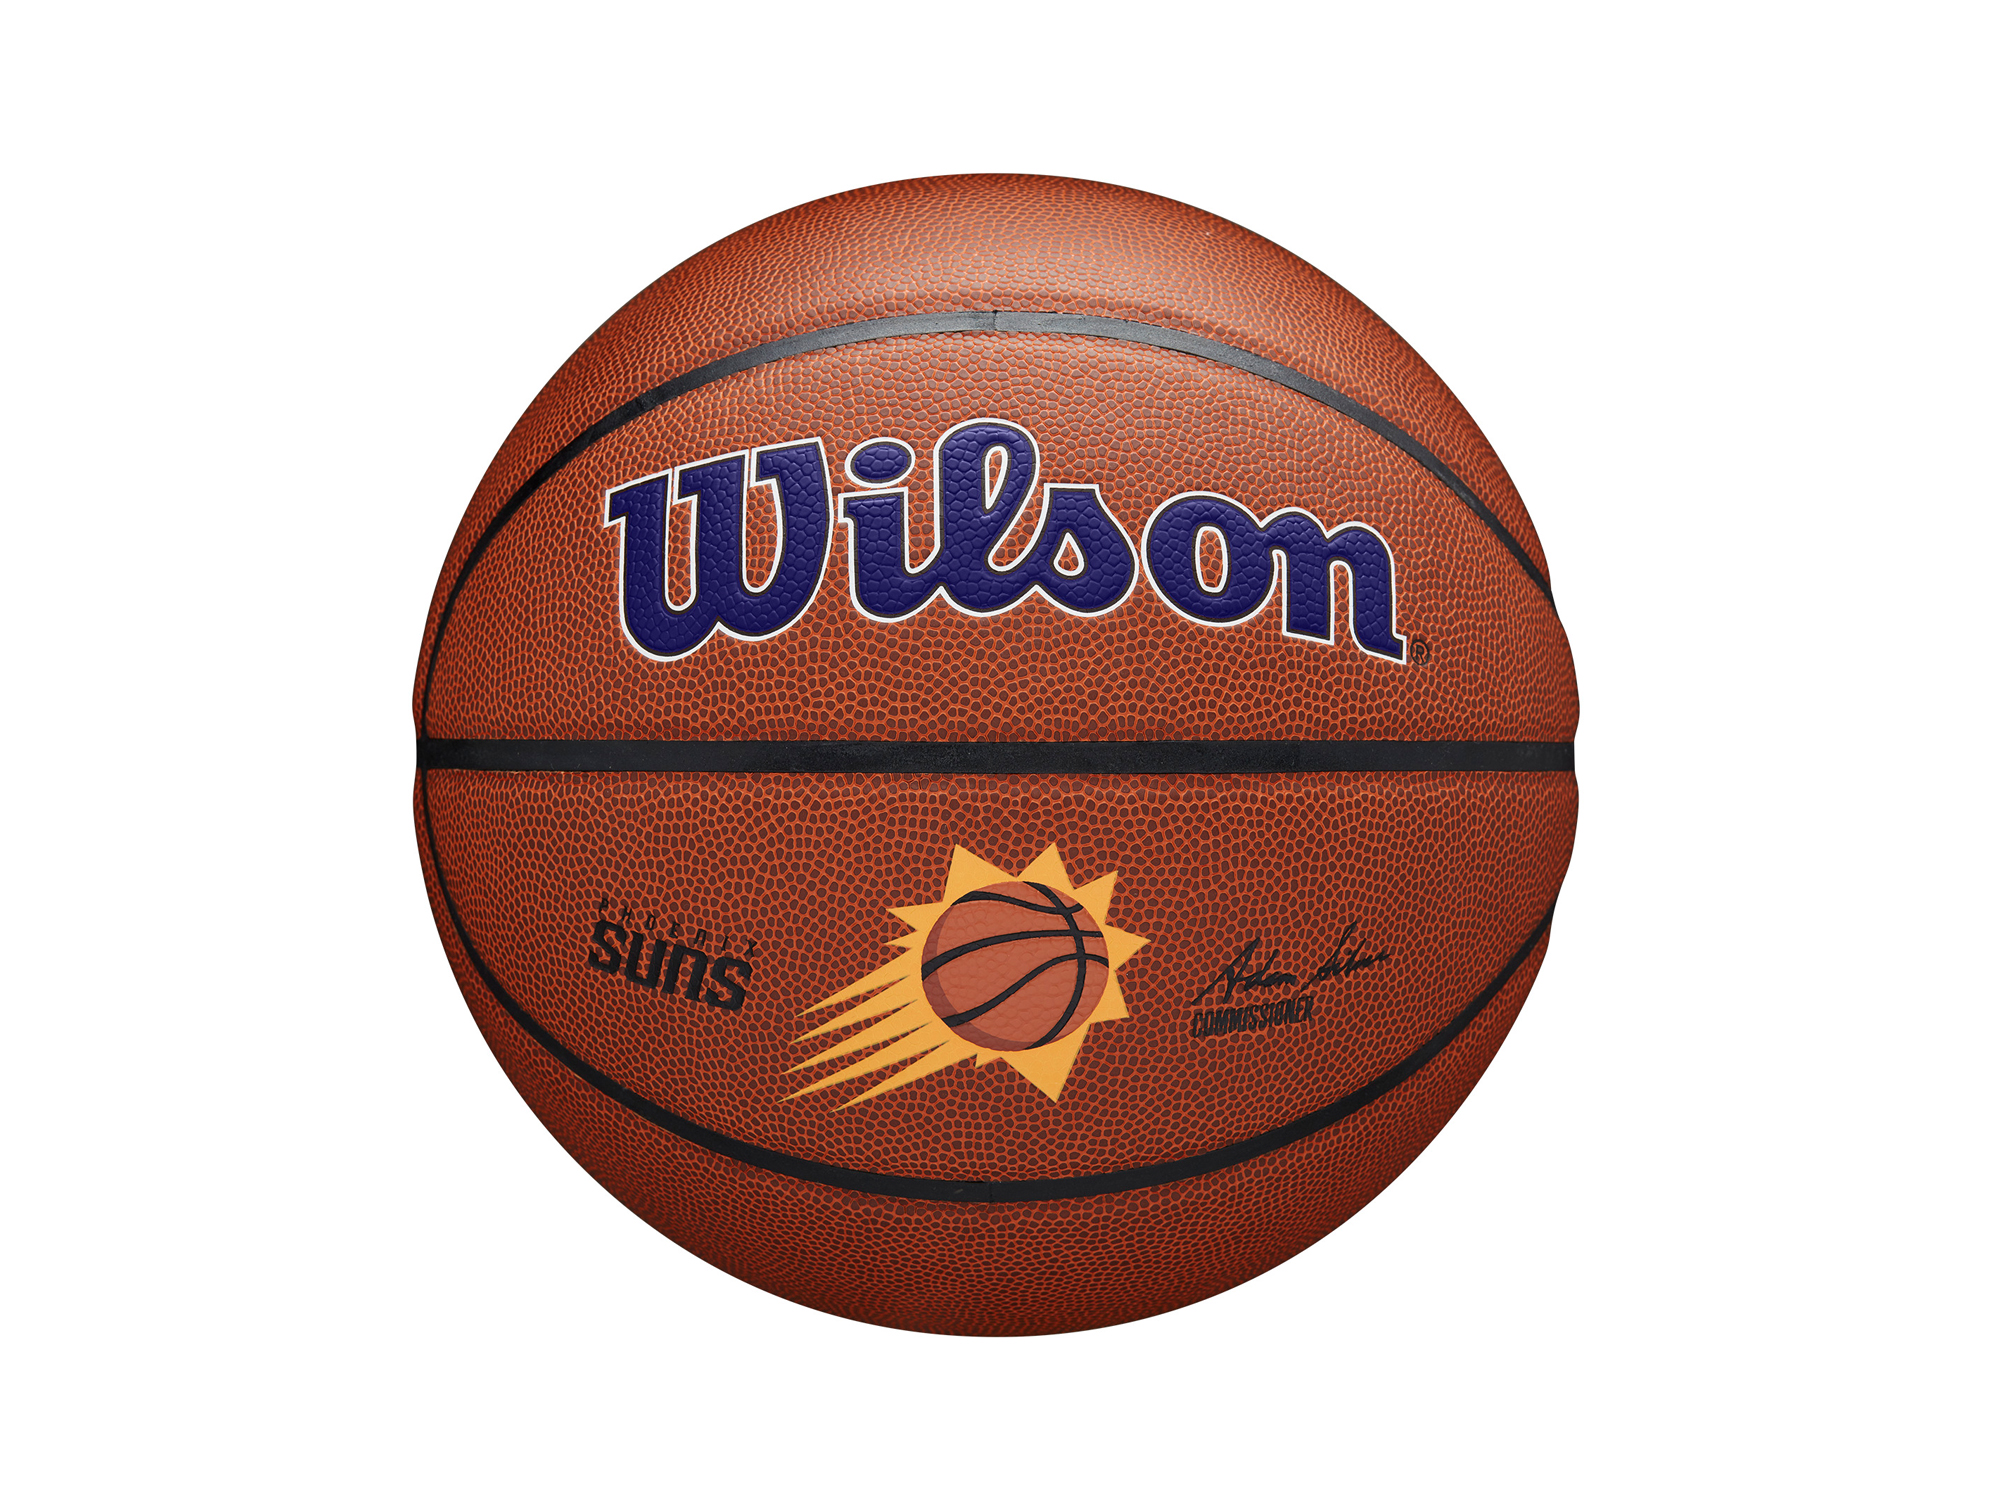 Wilson Phoenix Suns NBA Team Alliance Basketball